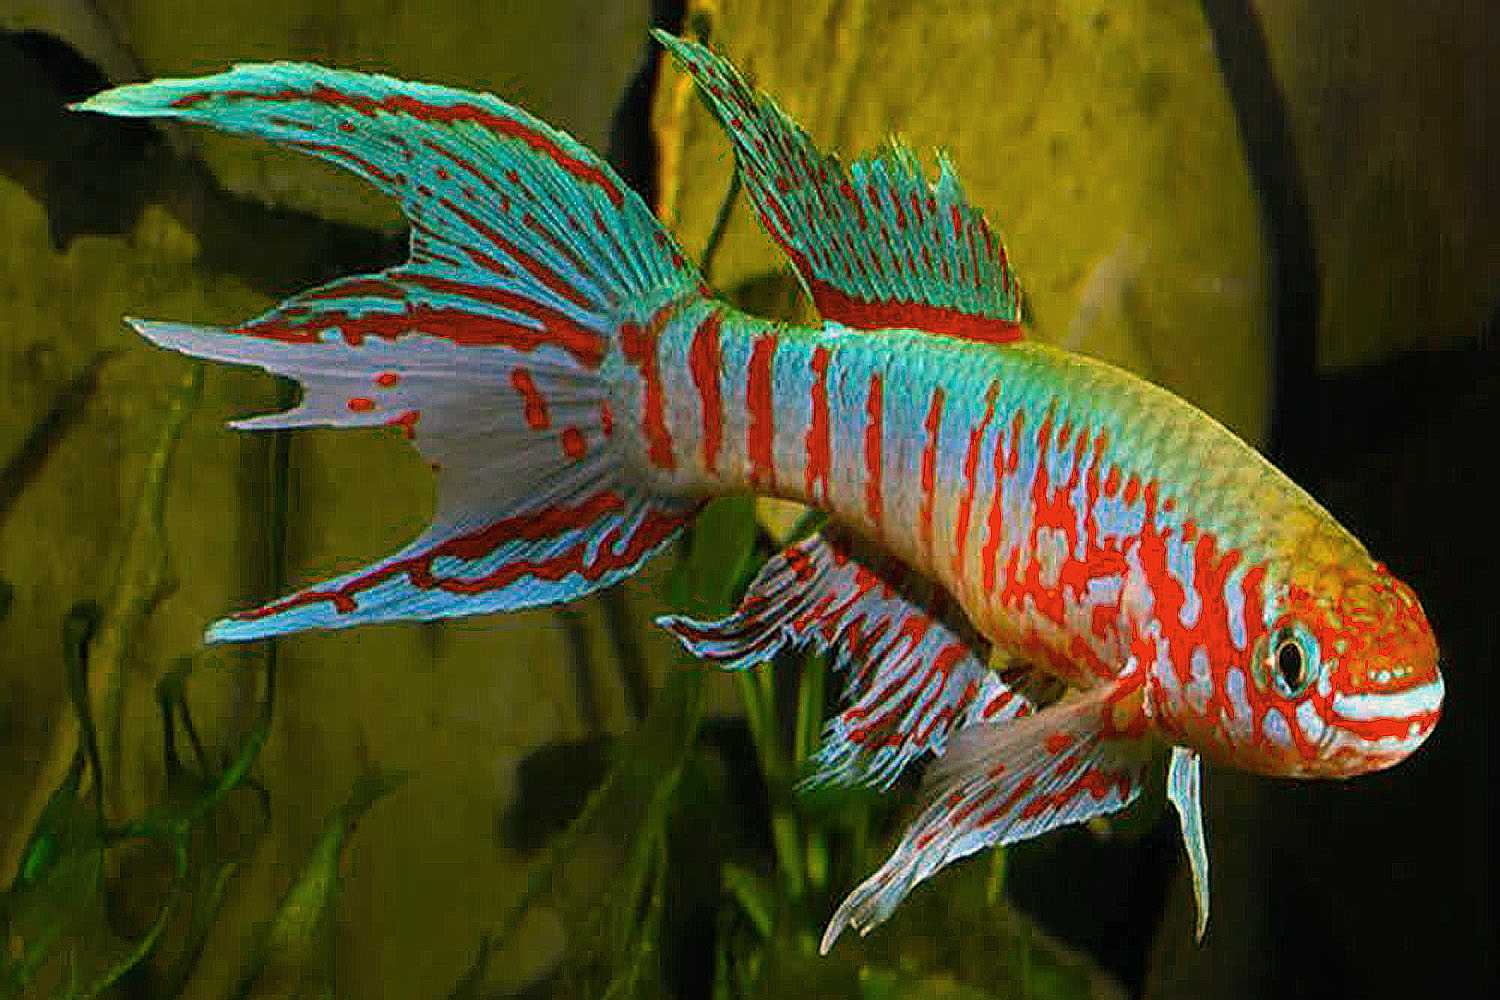 Red-striped Blue Gularis (Aphyosemion sjoestedti) swimming in a tank.